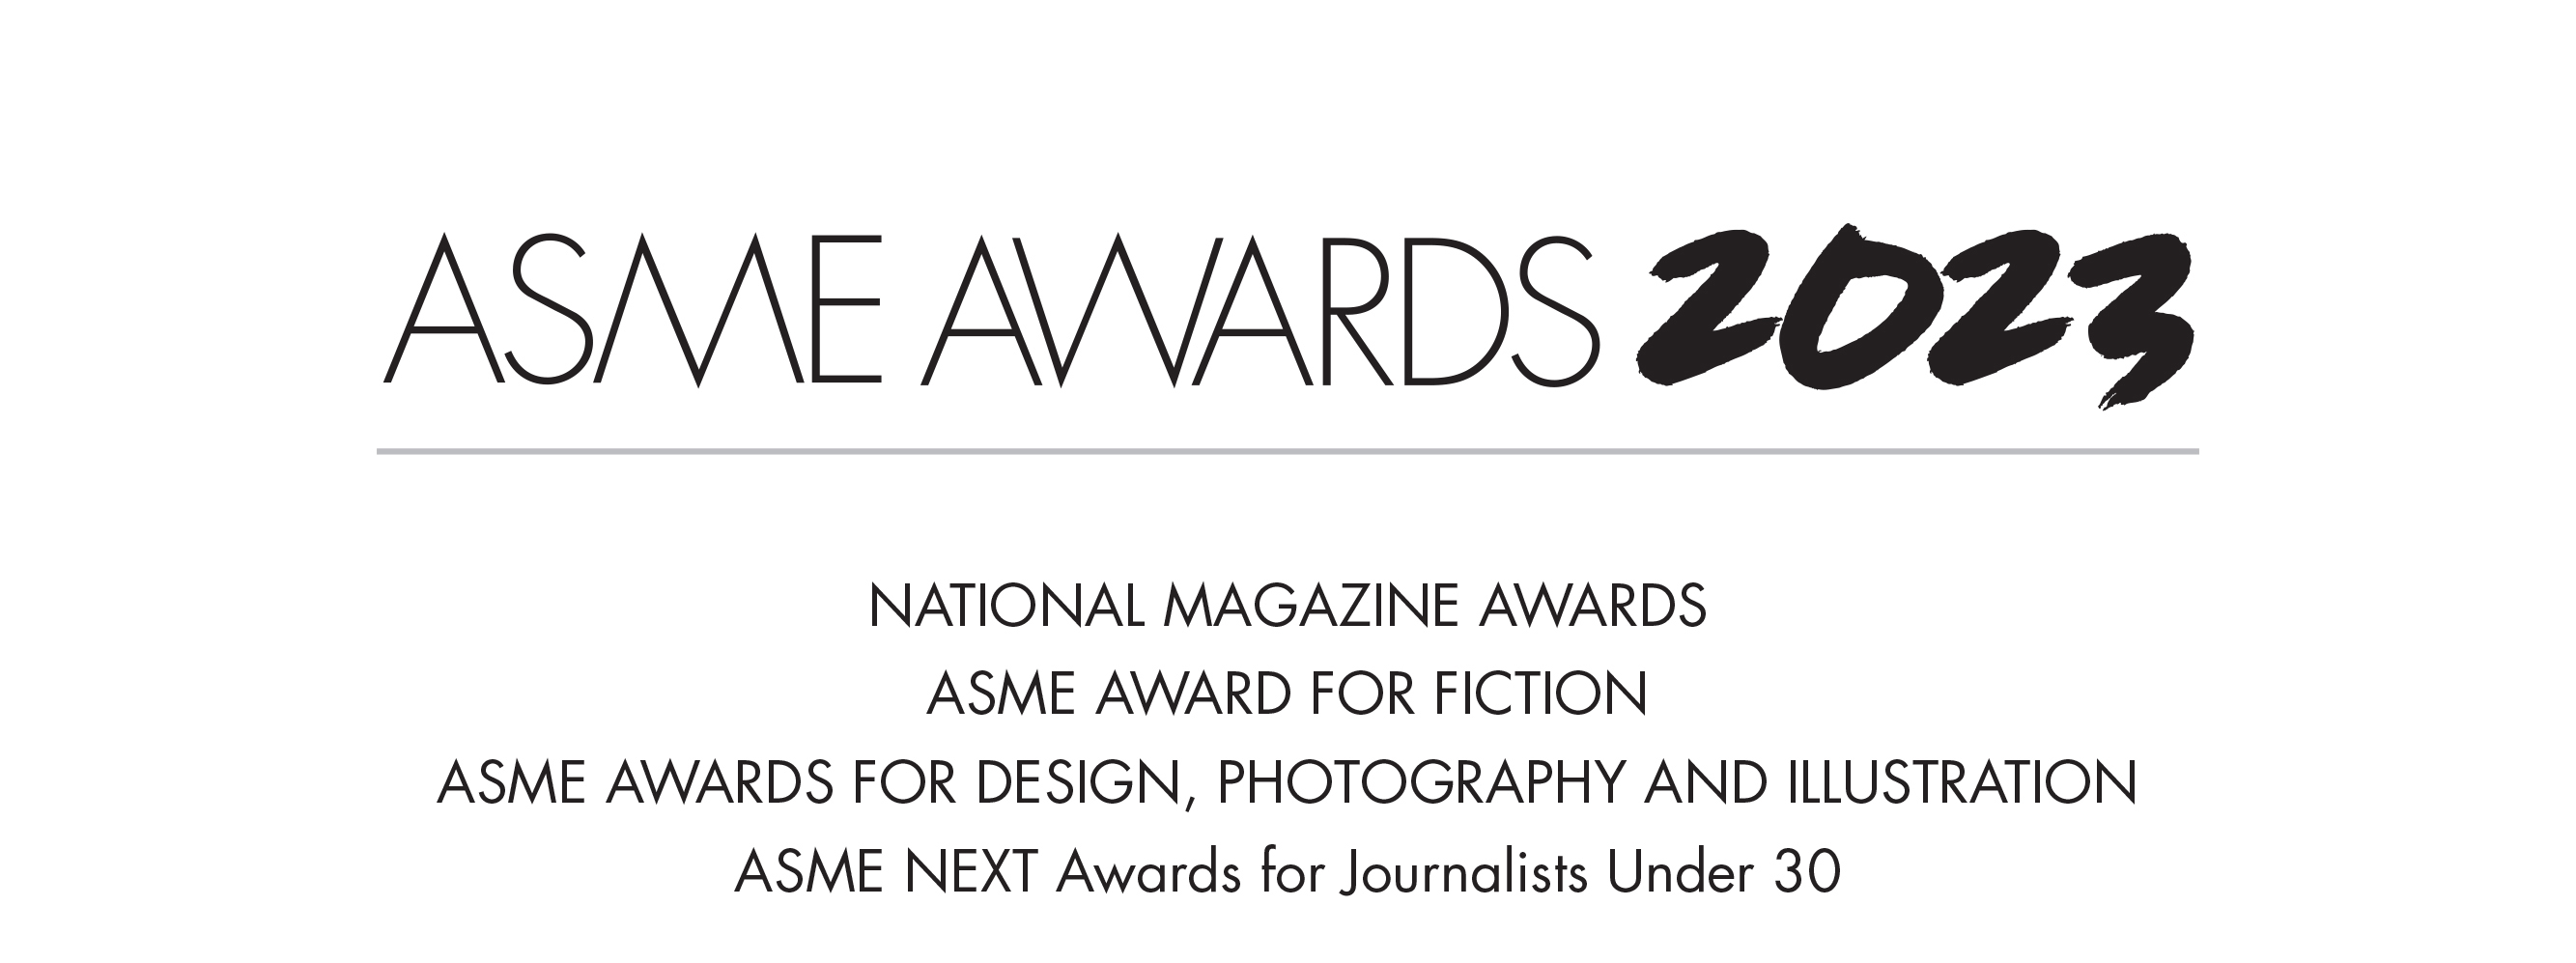 ASME Awards - National Magazine Awards, ASME Award for Fiction, ASME Awards for Design, Photography and Illustration and ASME NEXT Awards